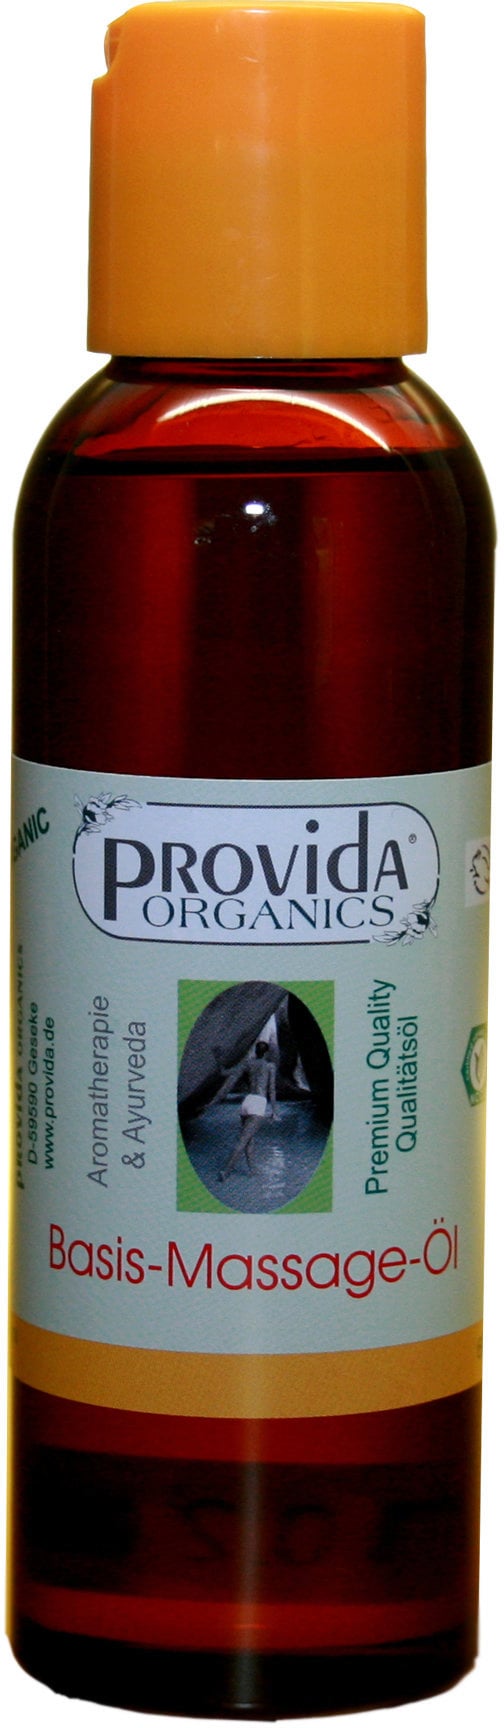 Provida Organics Basis-Massageöl kbA